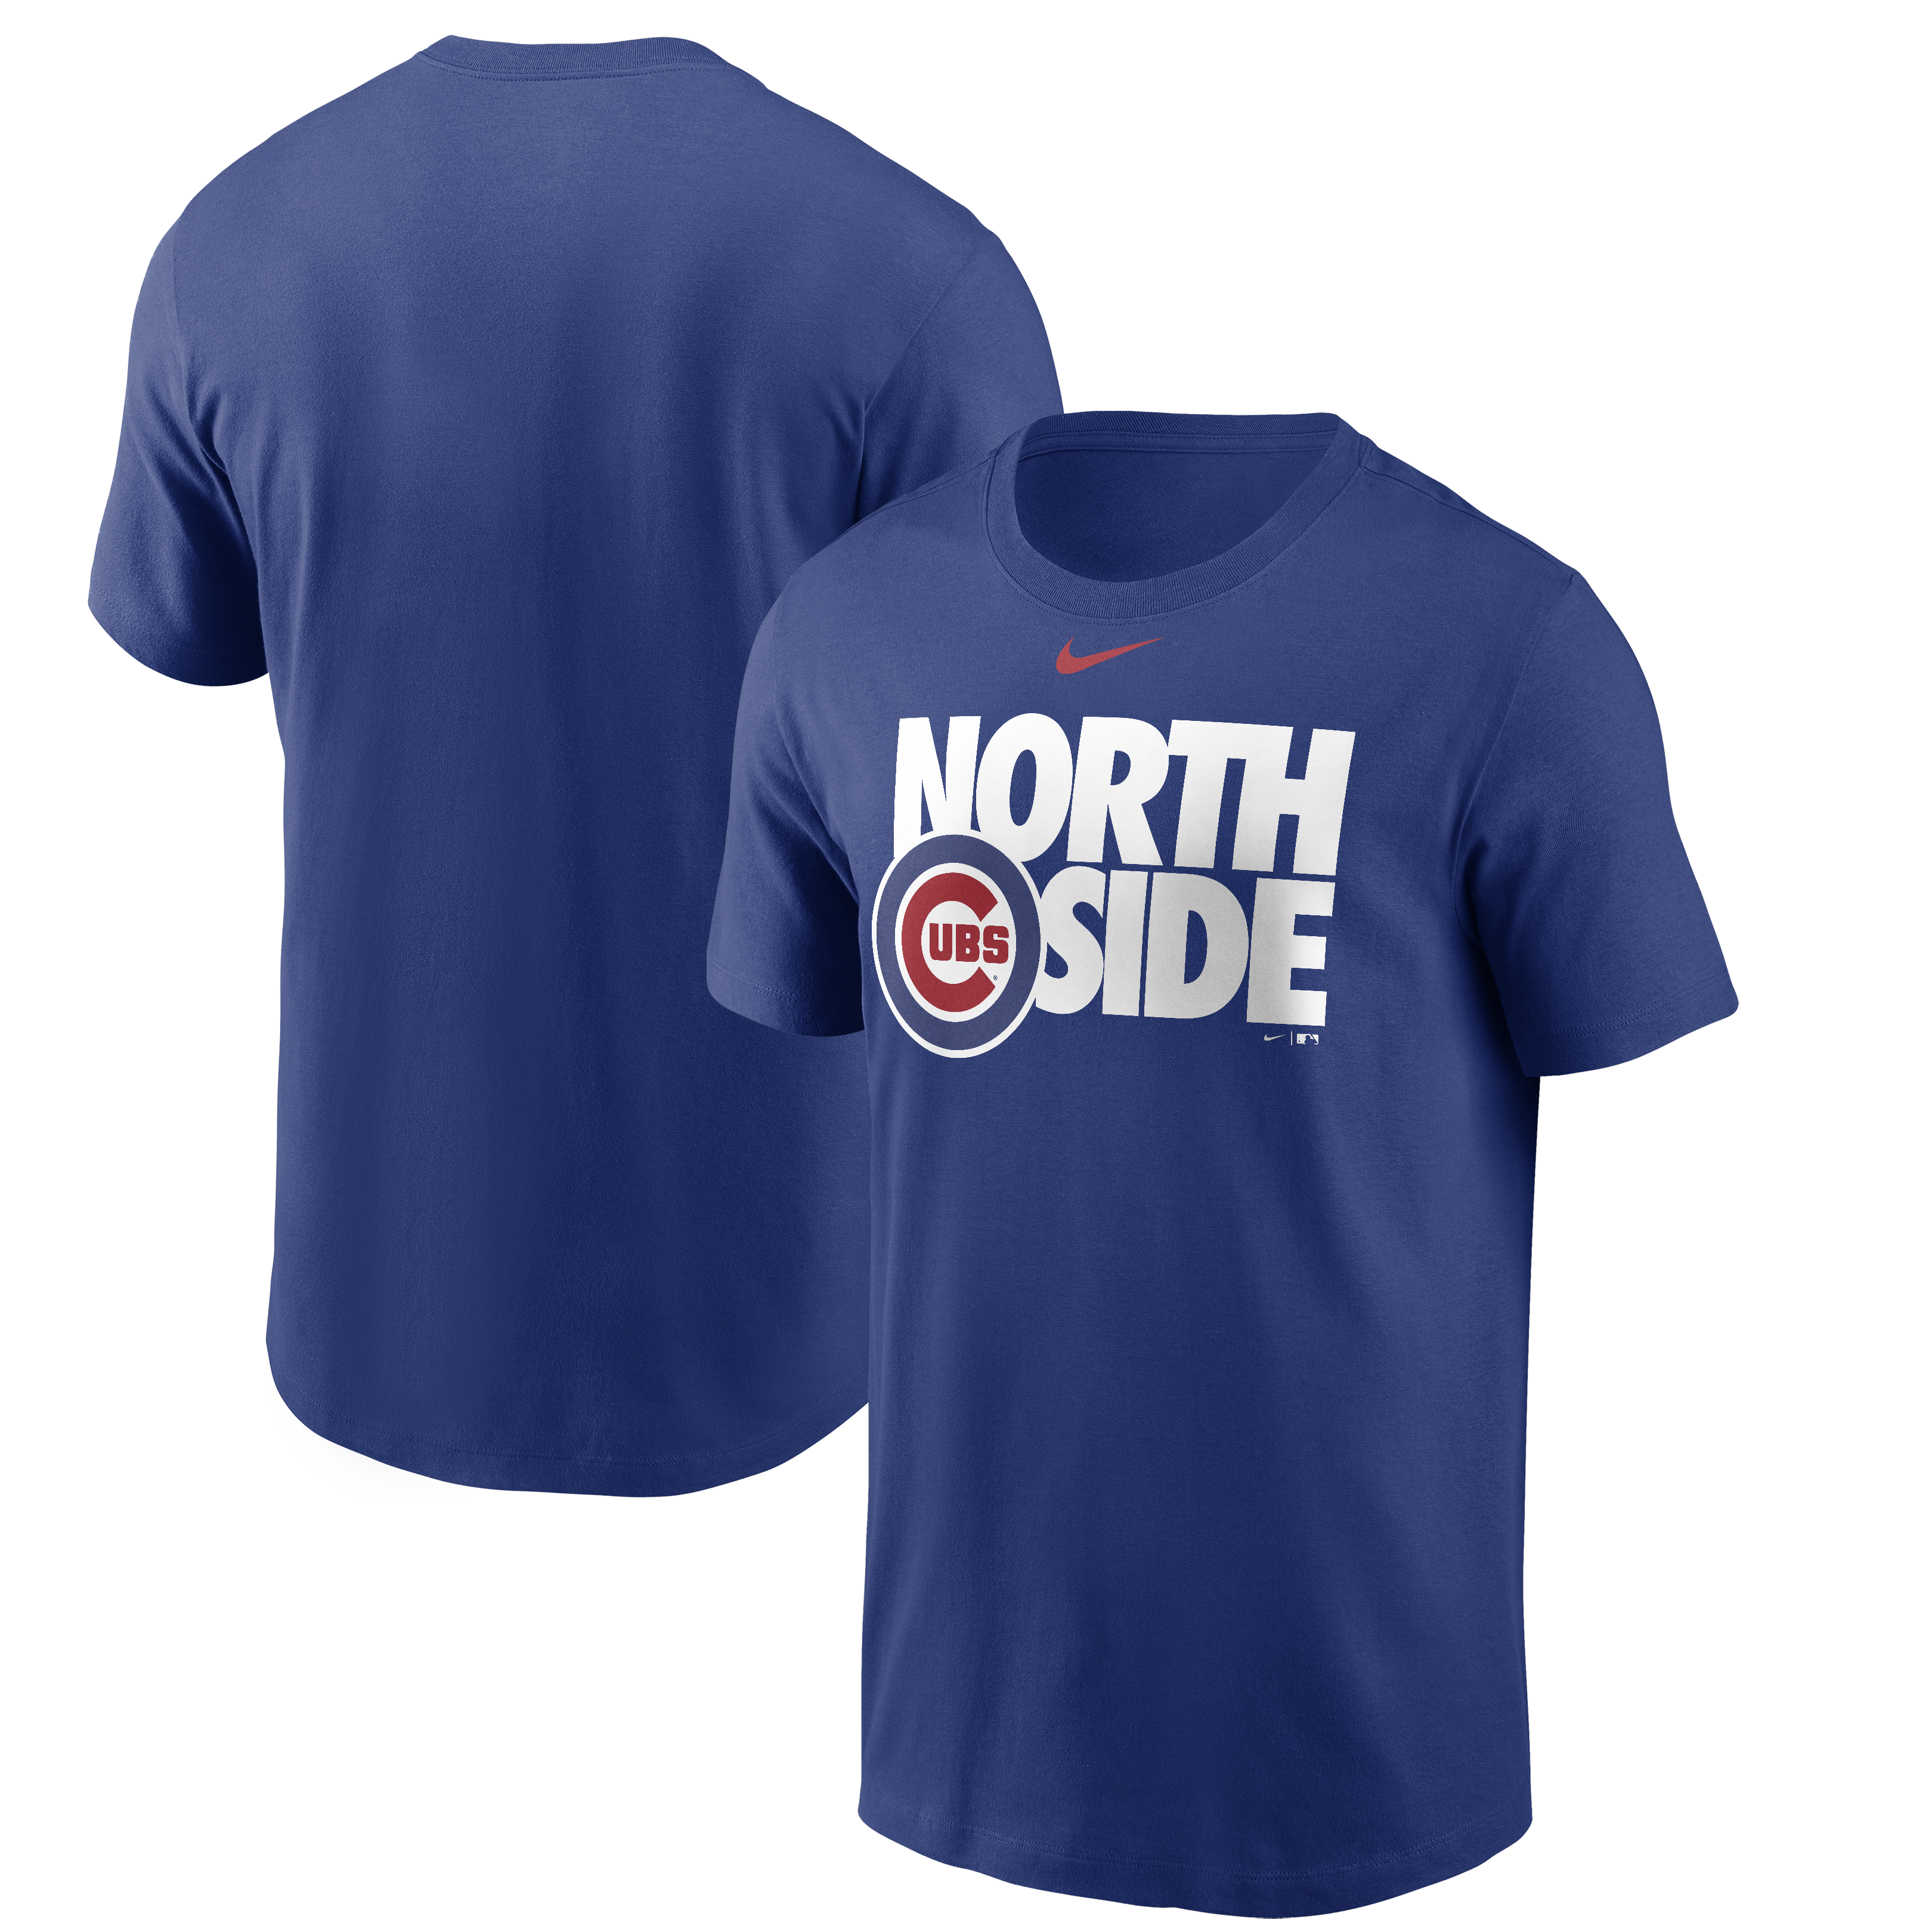 Nike Dri-FIT Legend Logo (MLB Chicago Cubs) Men's T-Shirt.